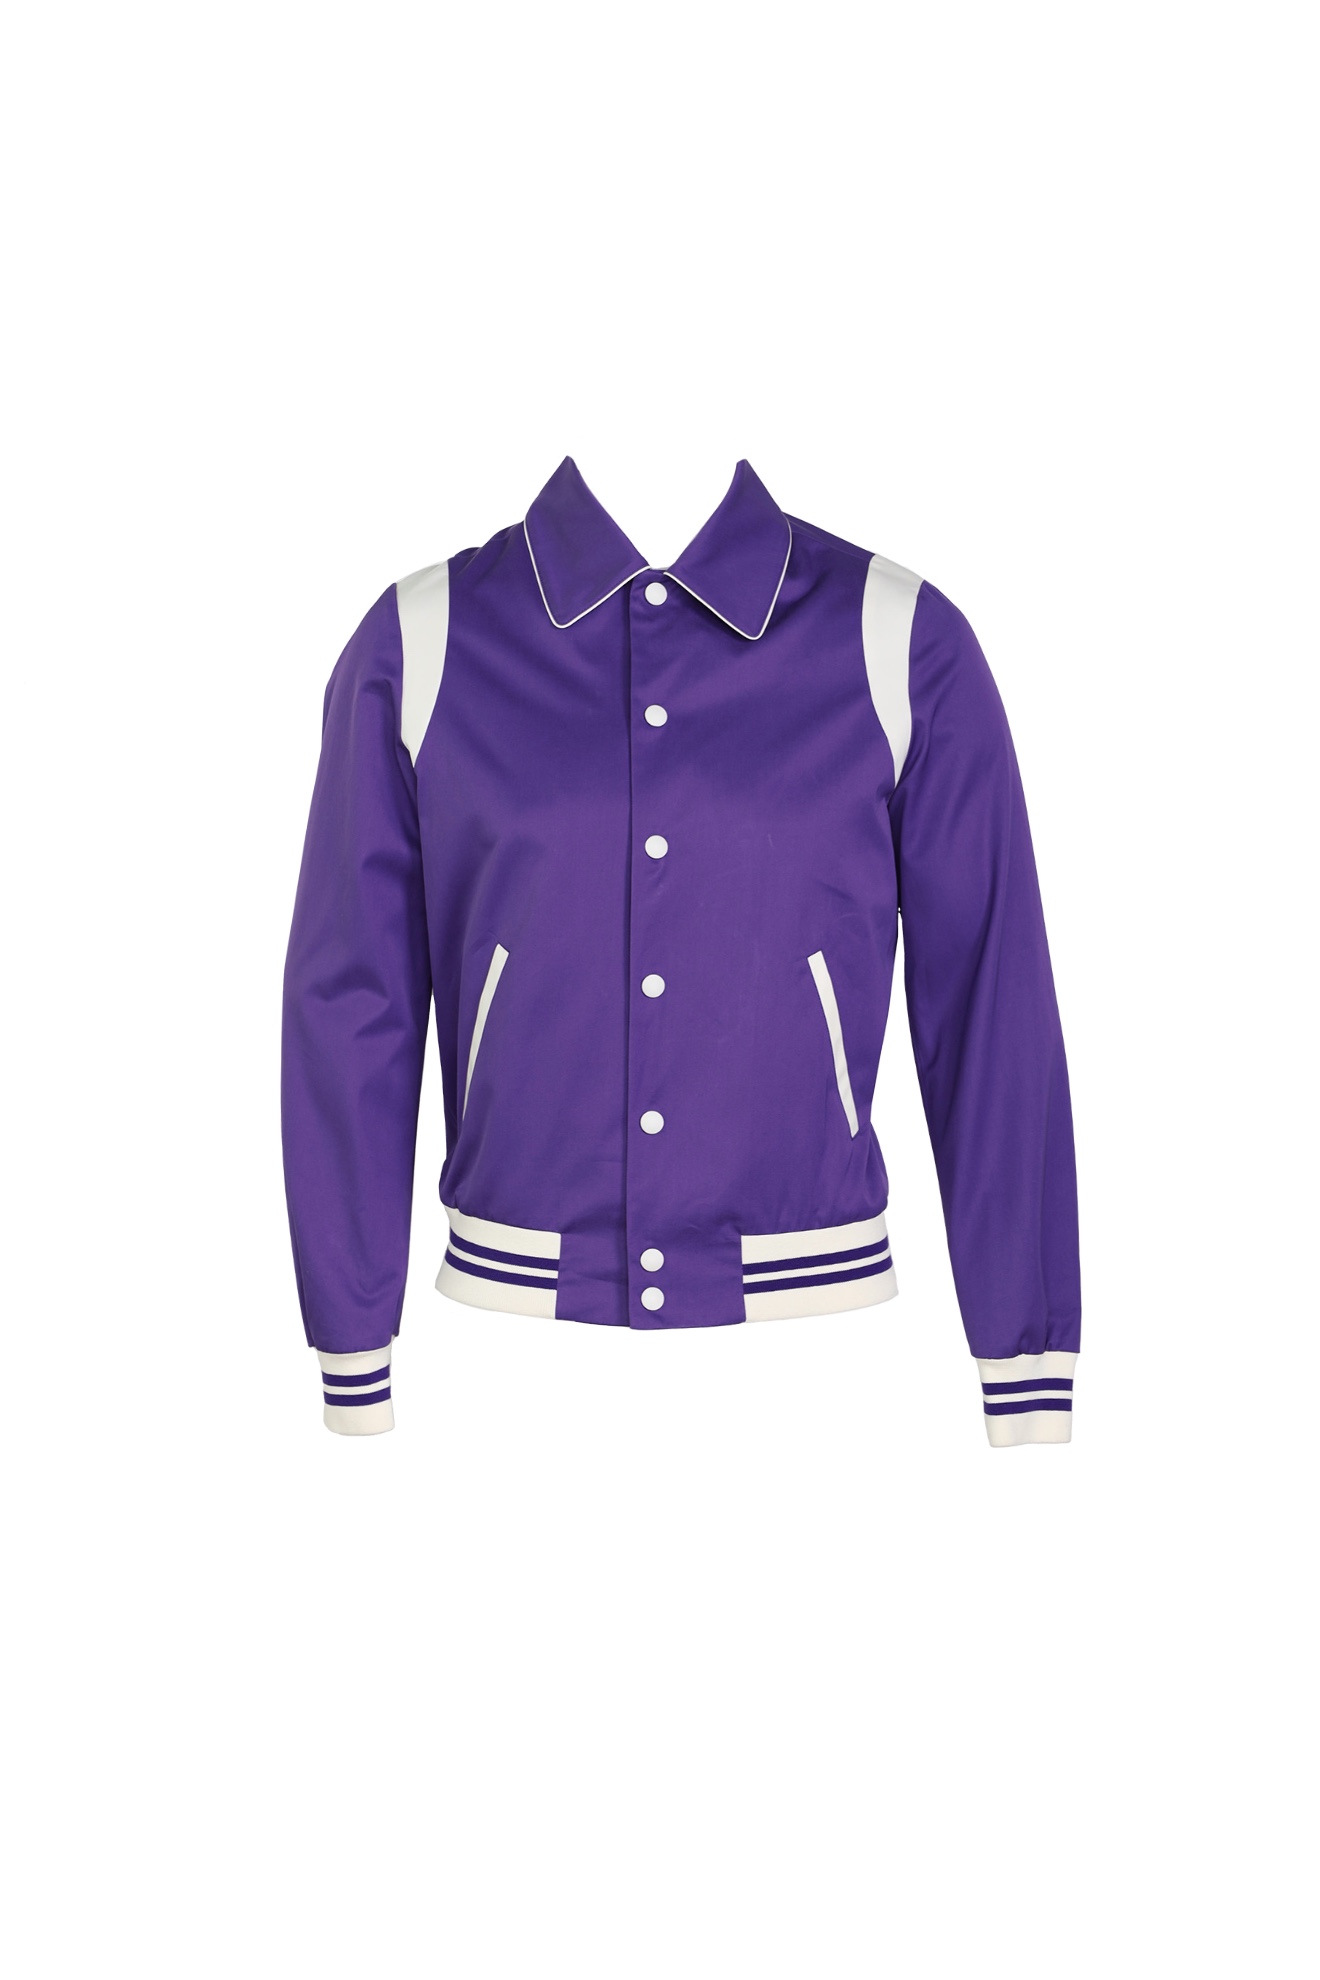 PT Torino College style cotton jacket purple 50